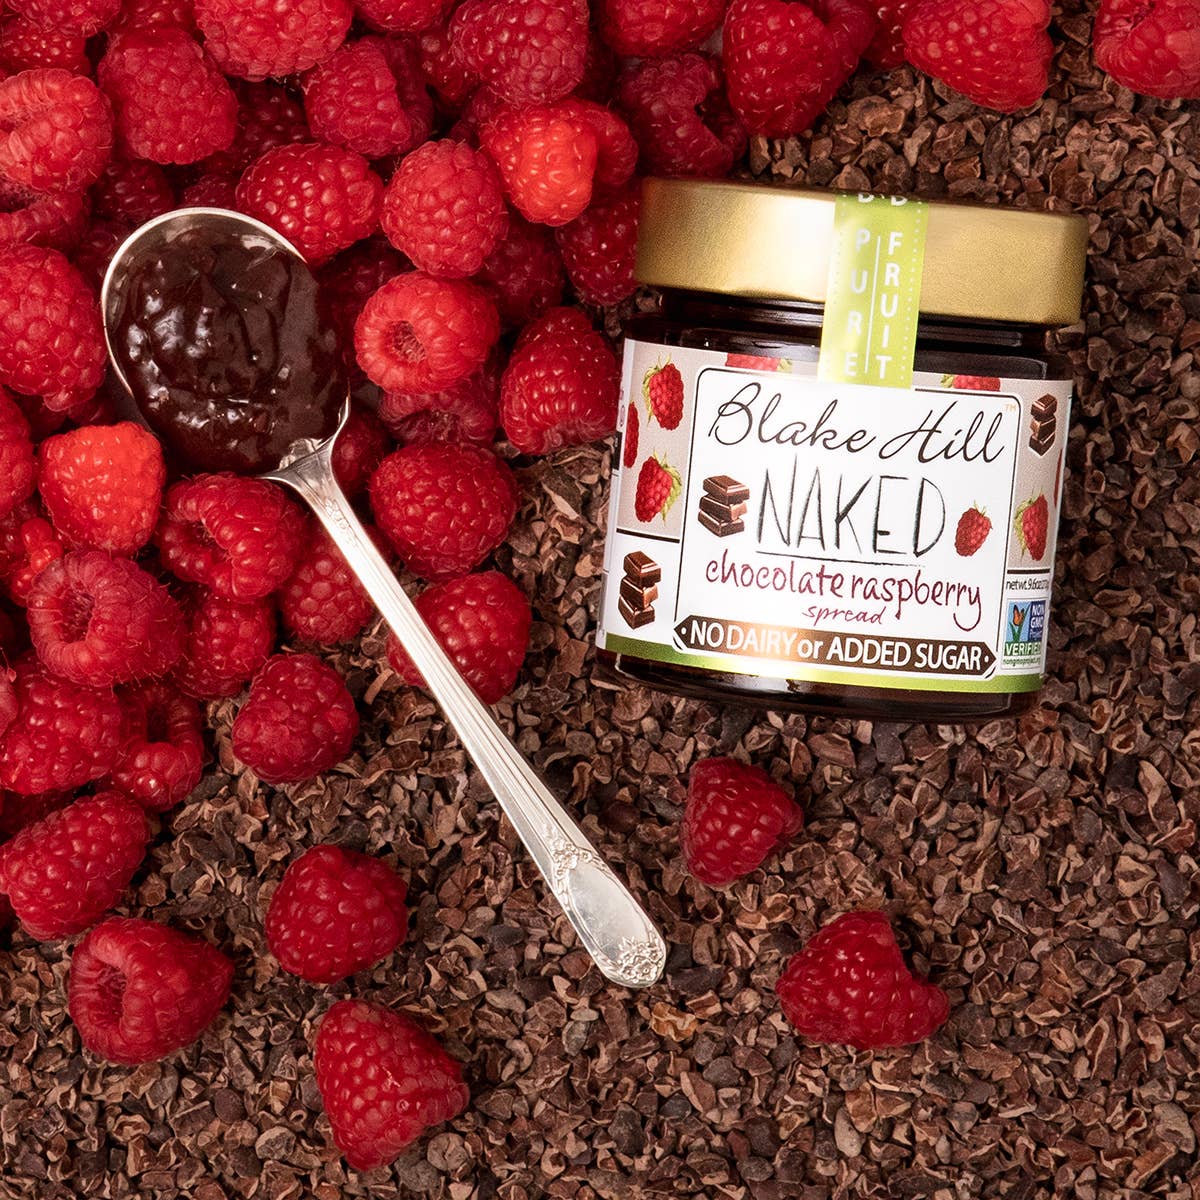 Blake Hill Preserves - Naked Chocolate Raspberry Spread - No Added Sugar